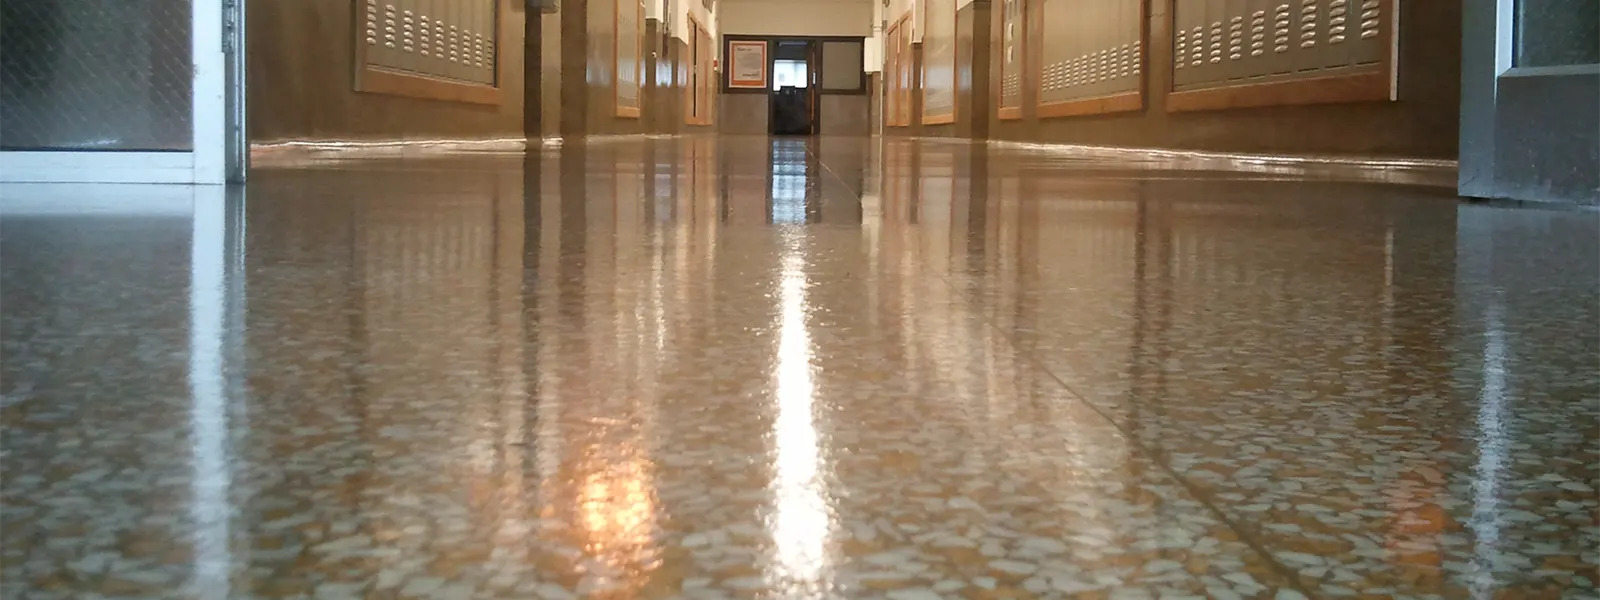 Terrazzo education hallway